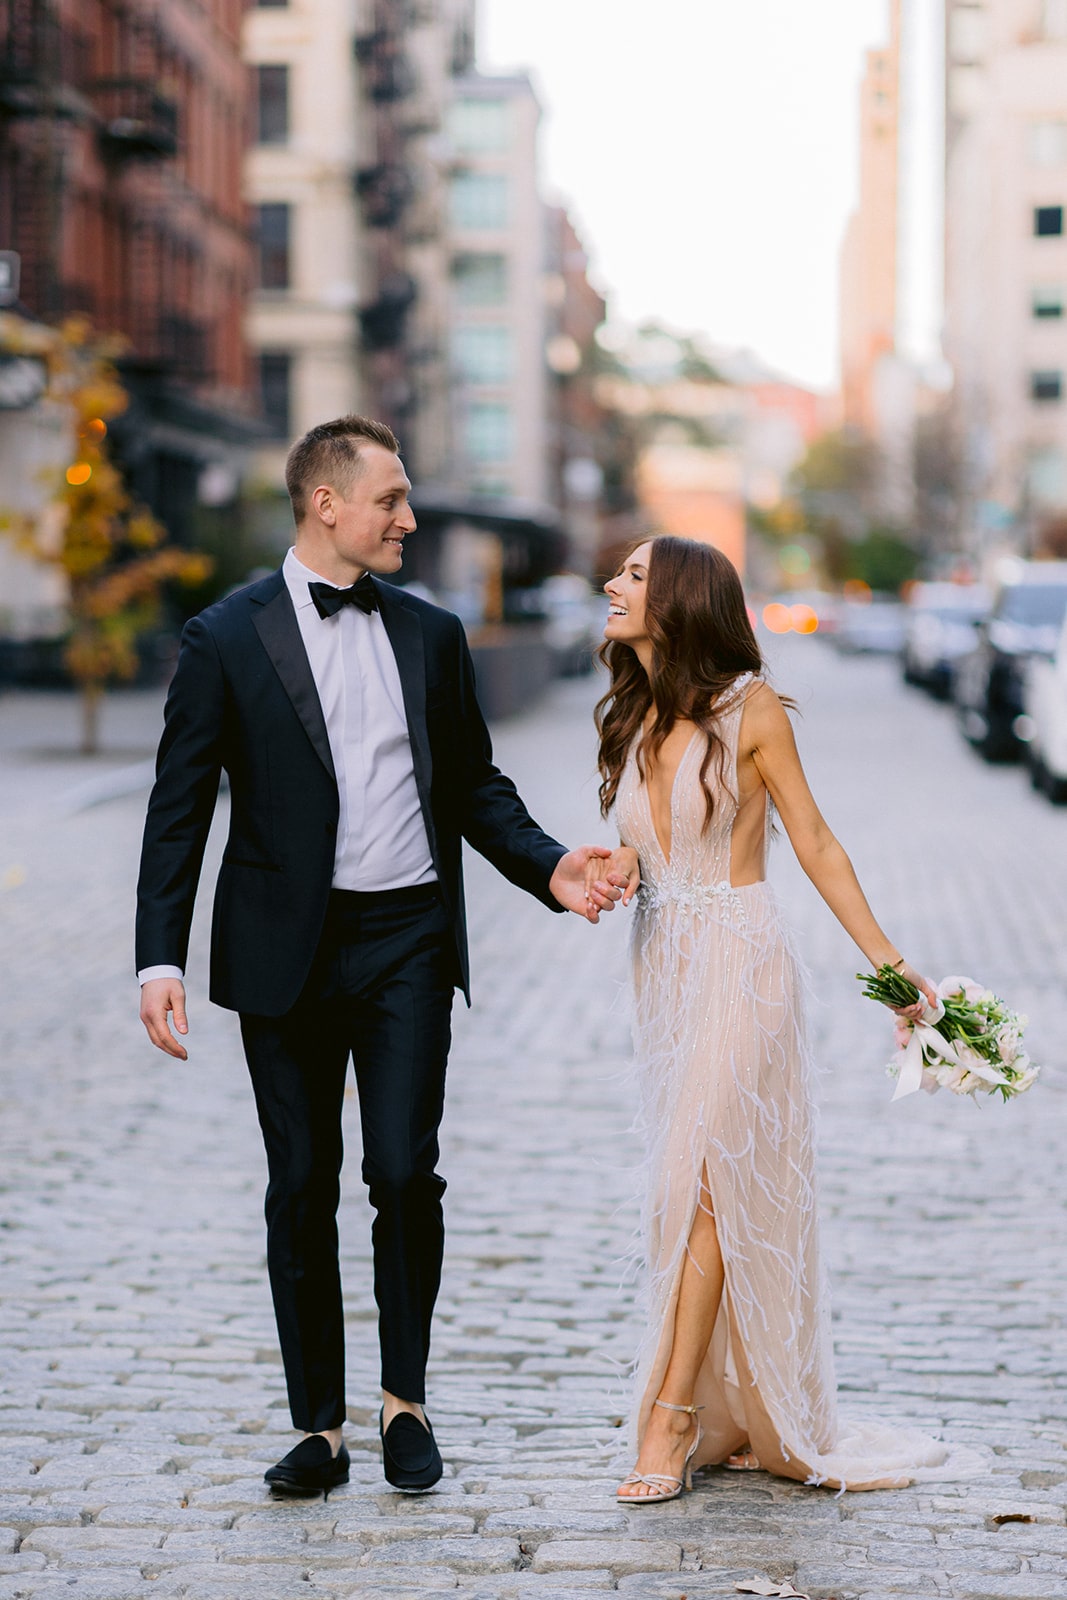 Jewish wedding at Tribeca Rooftop - Larisa Shorina Photography - Elegant luxury weddings in New York, Italy, Destinations